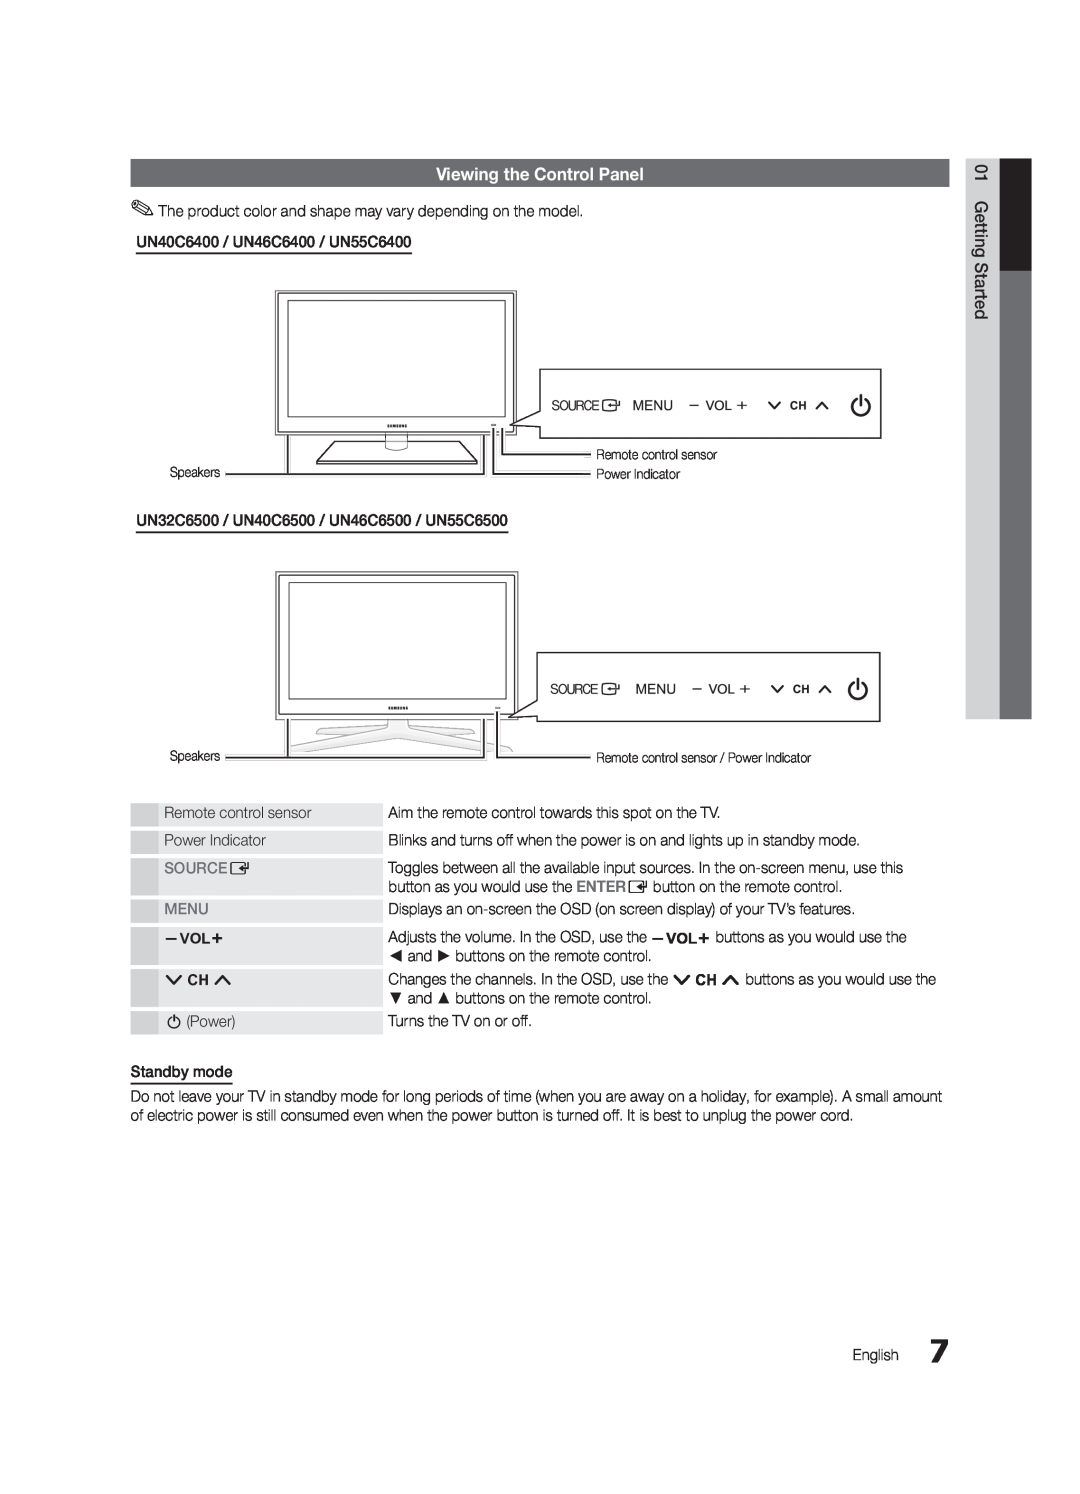 Samsung UC6500-ZC, BN68-02711B-04 user manual Viewing the Control Panel, Source E, Menu 